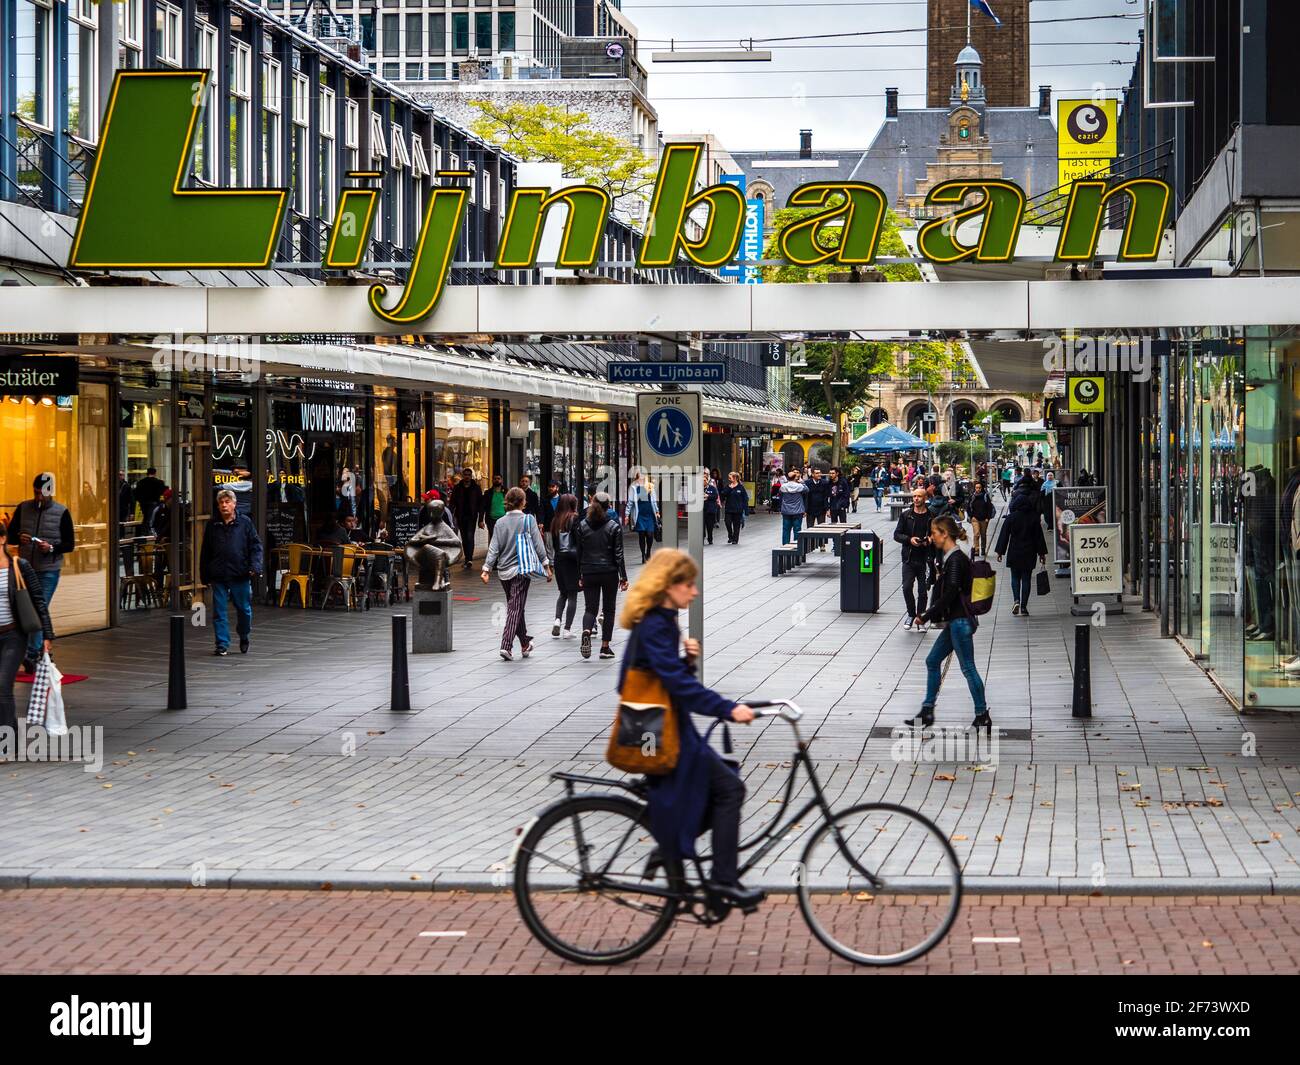 Lijnbaan Rotterdam - Lijnbaan was opened in 1953 as Europe's first modern pedestrianised shopping street, architects Van den Broek & Bakema Stock Photo